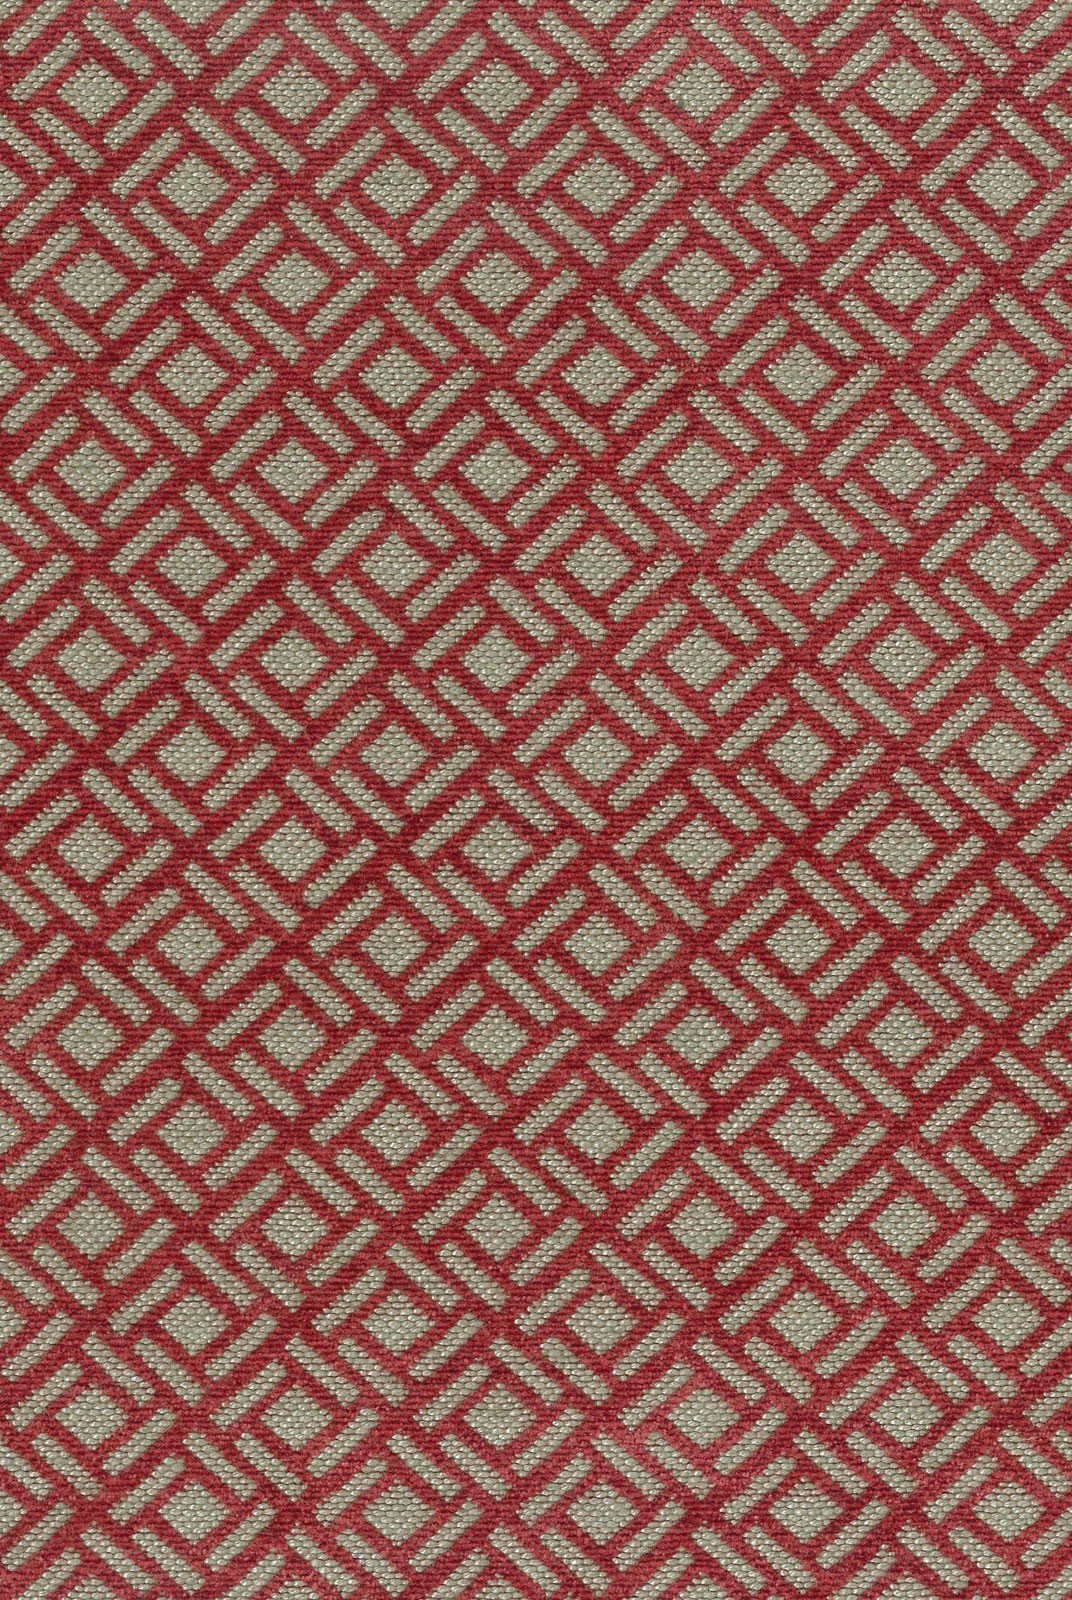 Nina Campbell Fabric - Brodie Kelburn Coral/Beige NCF4144-01